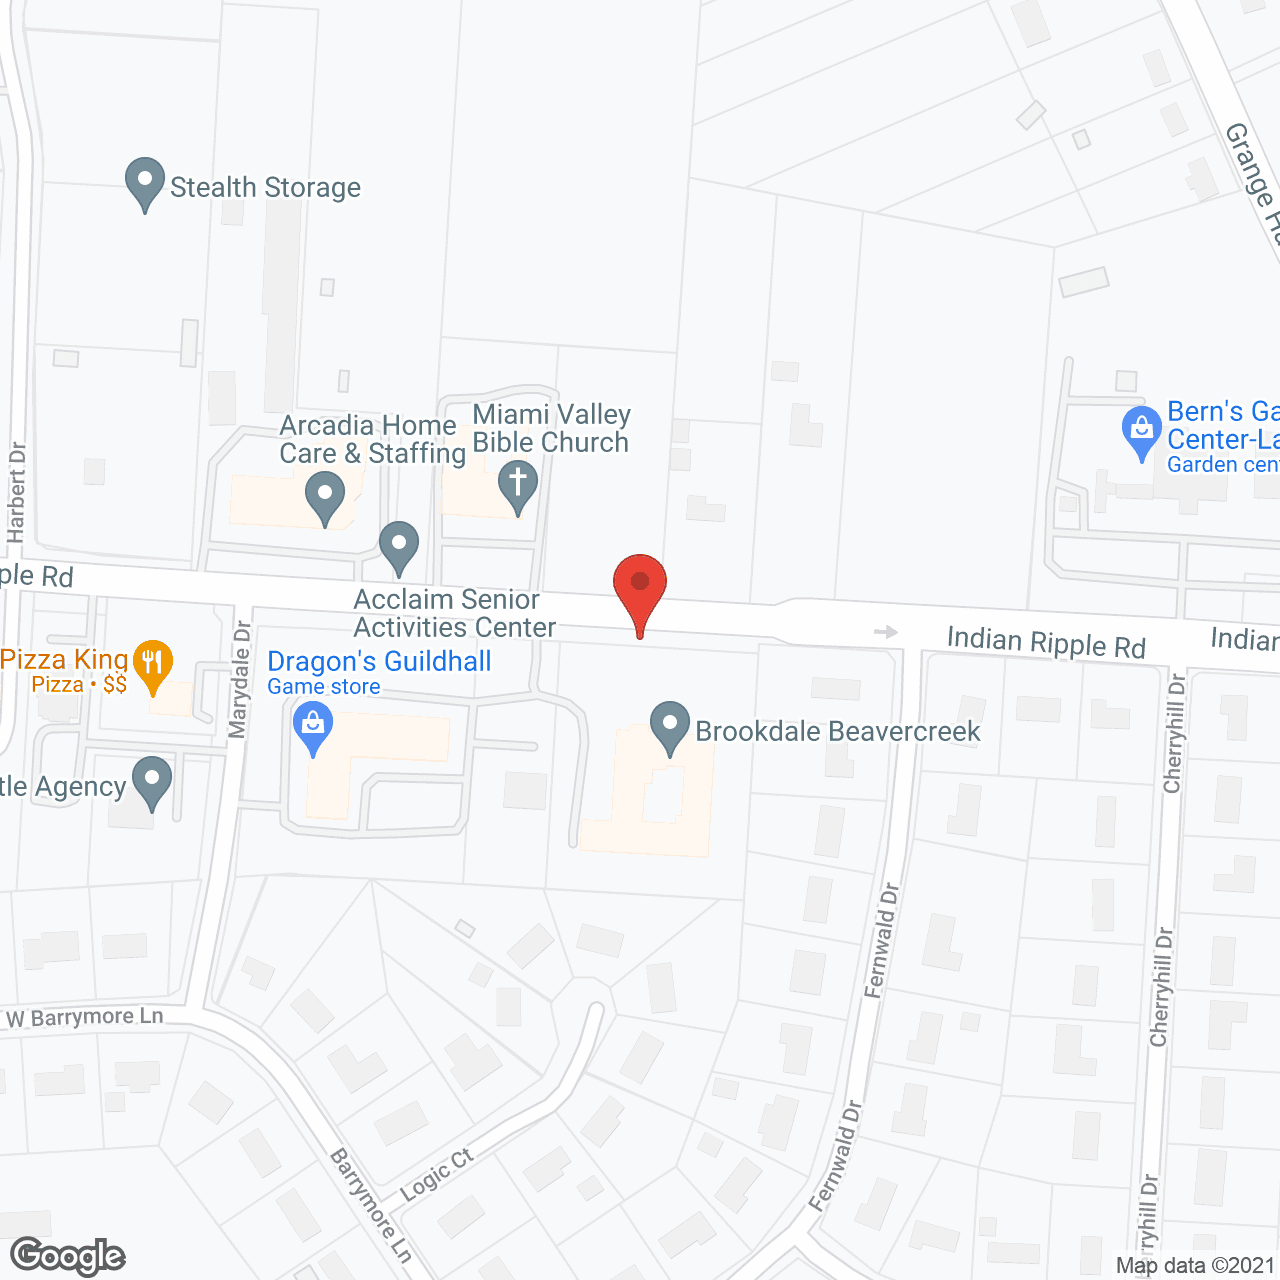 Brookdale Beavercreek (Offering HealthPlus) in google map